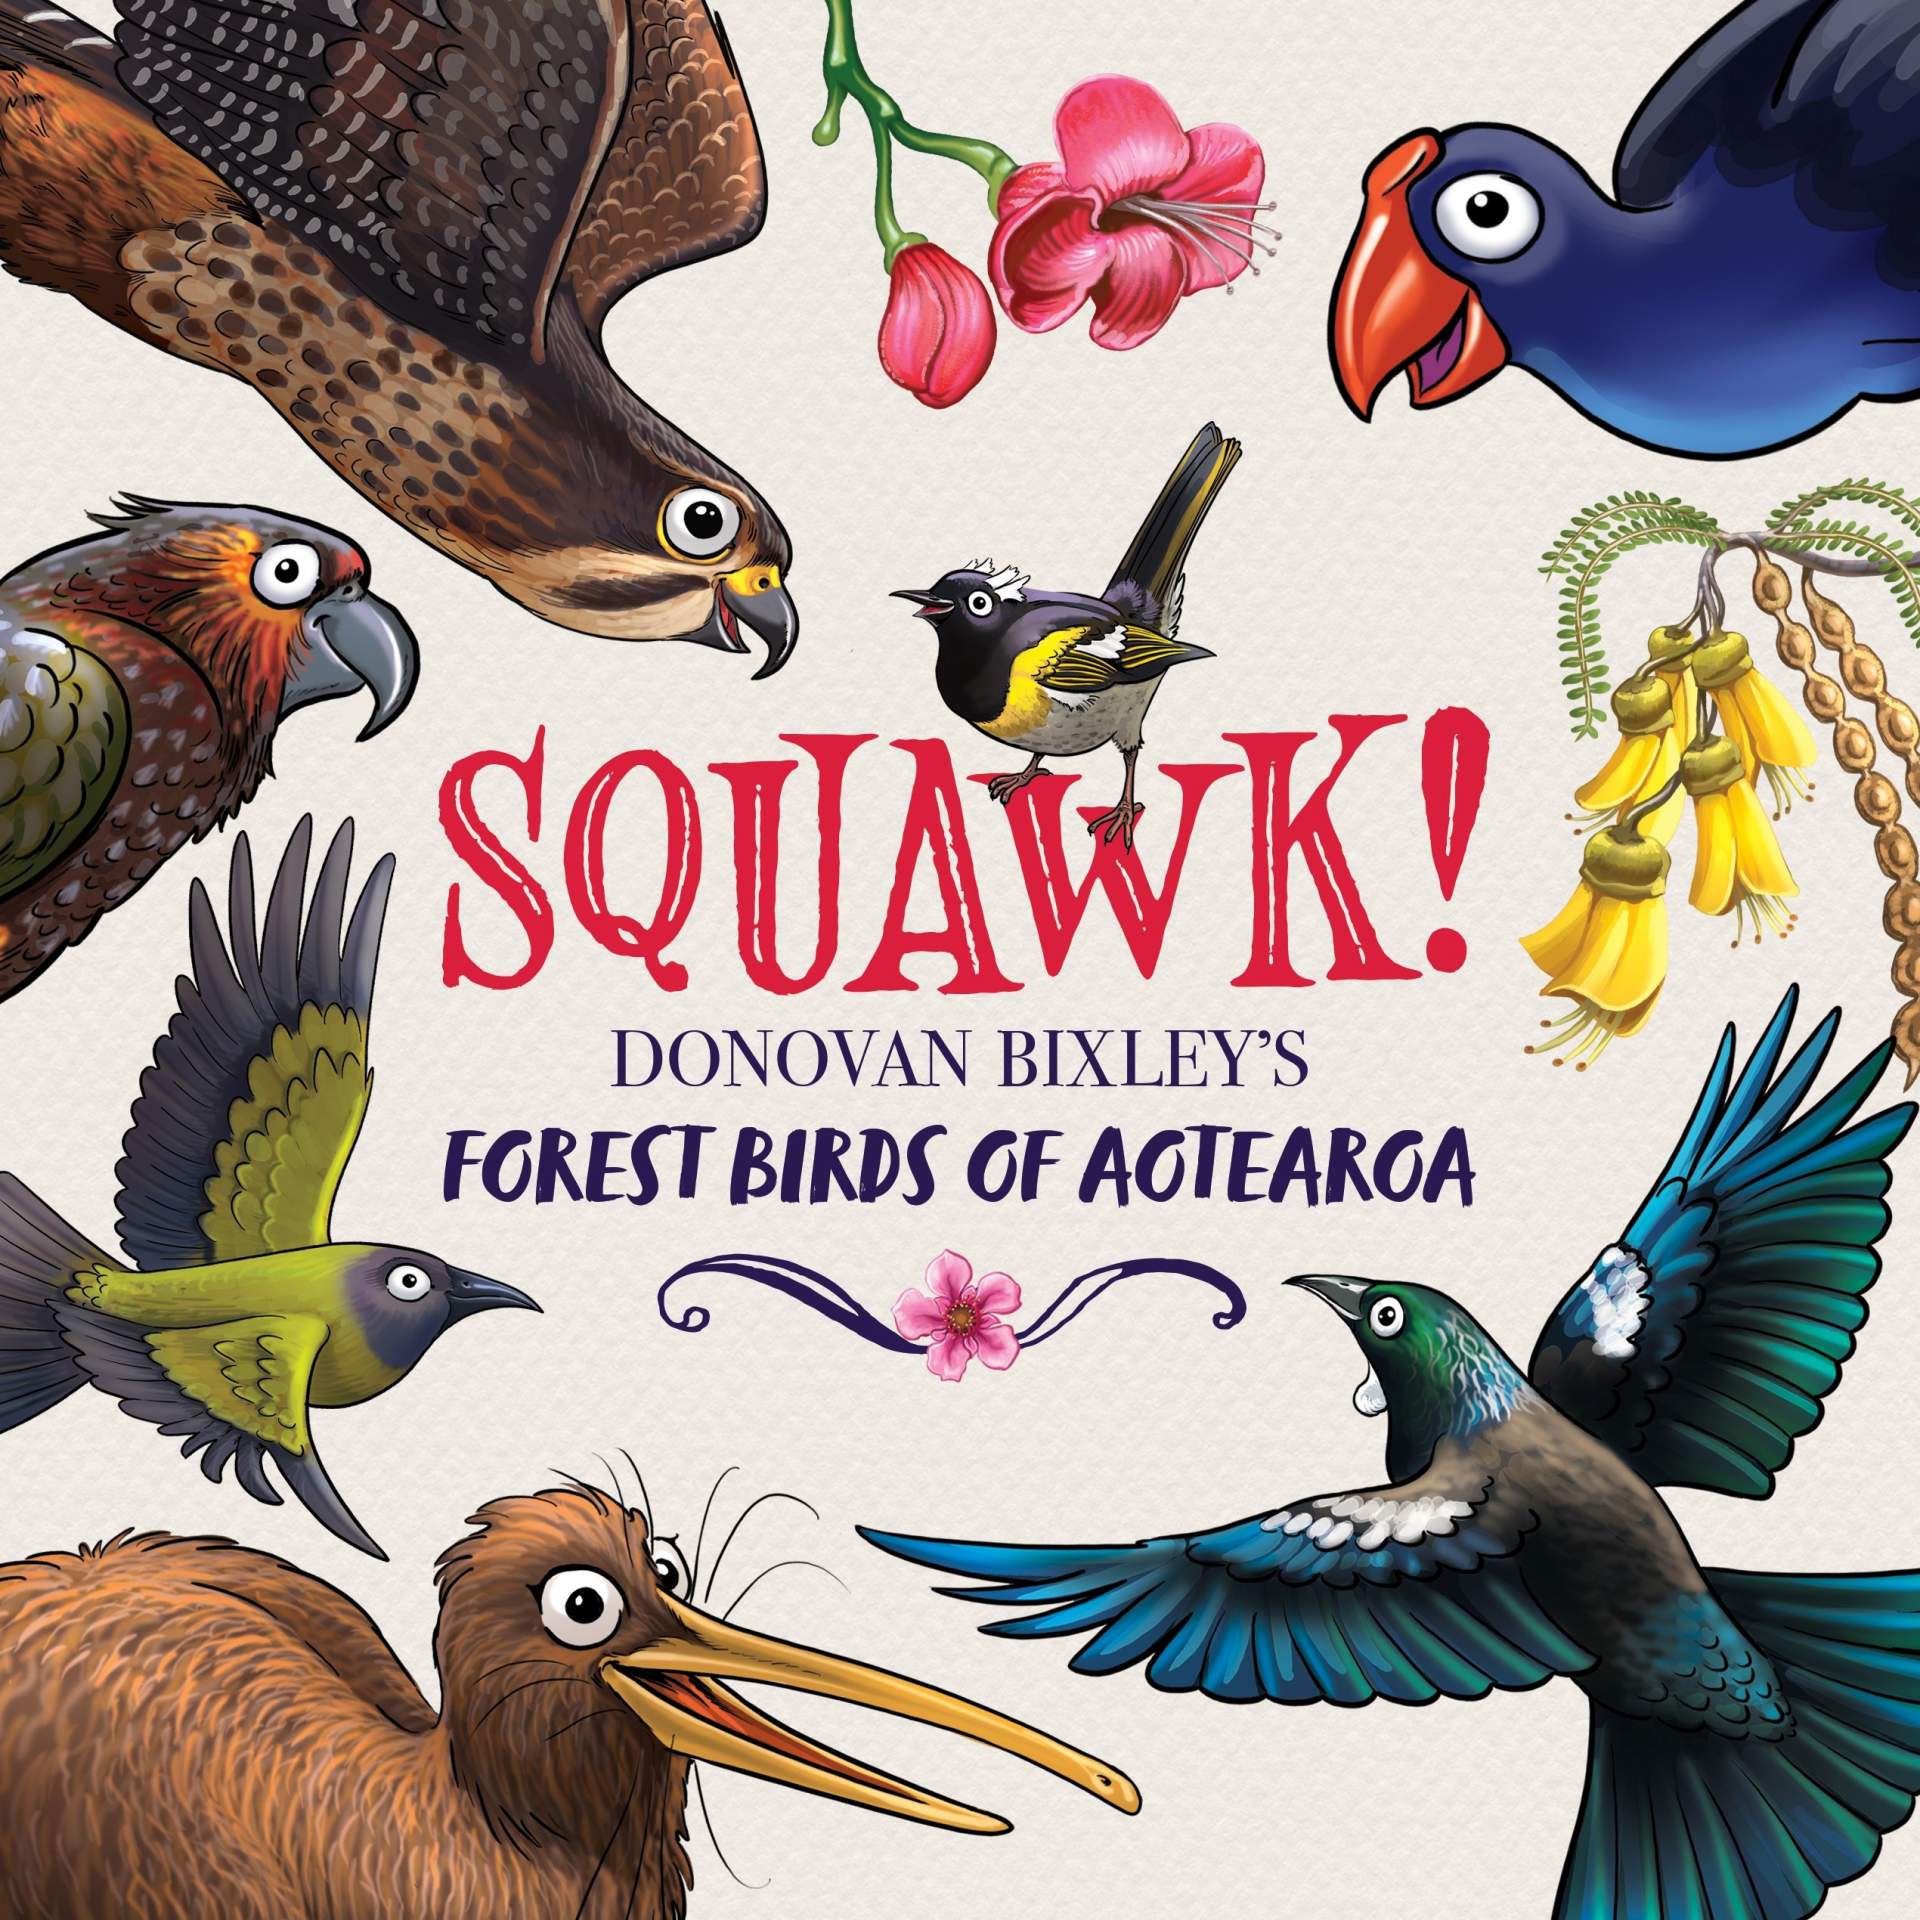 Squawk 
Donovan Bixley's Forest Birds of Aotearoa